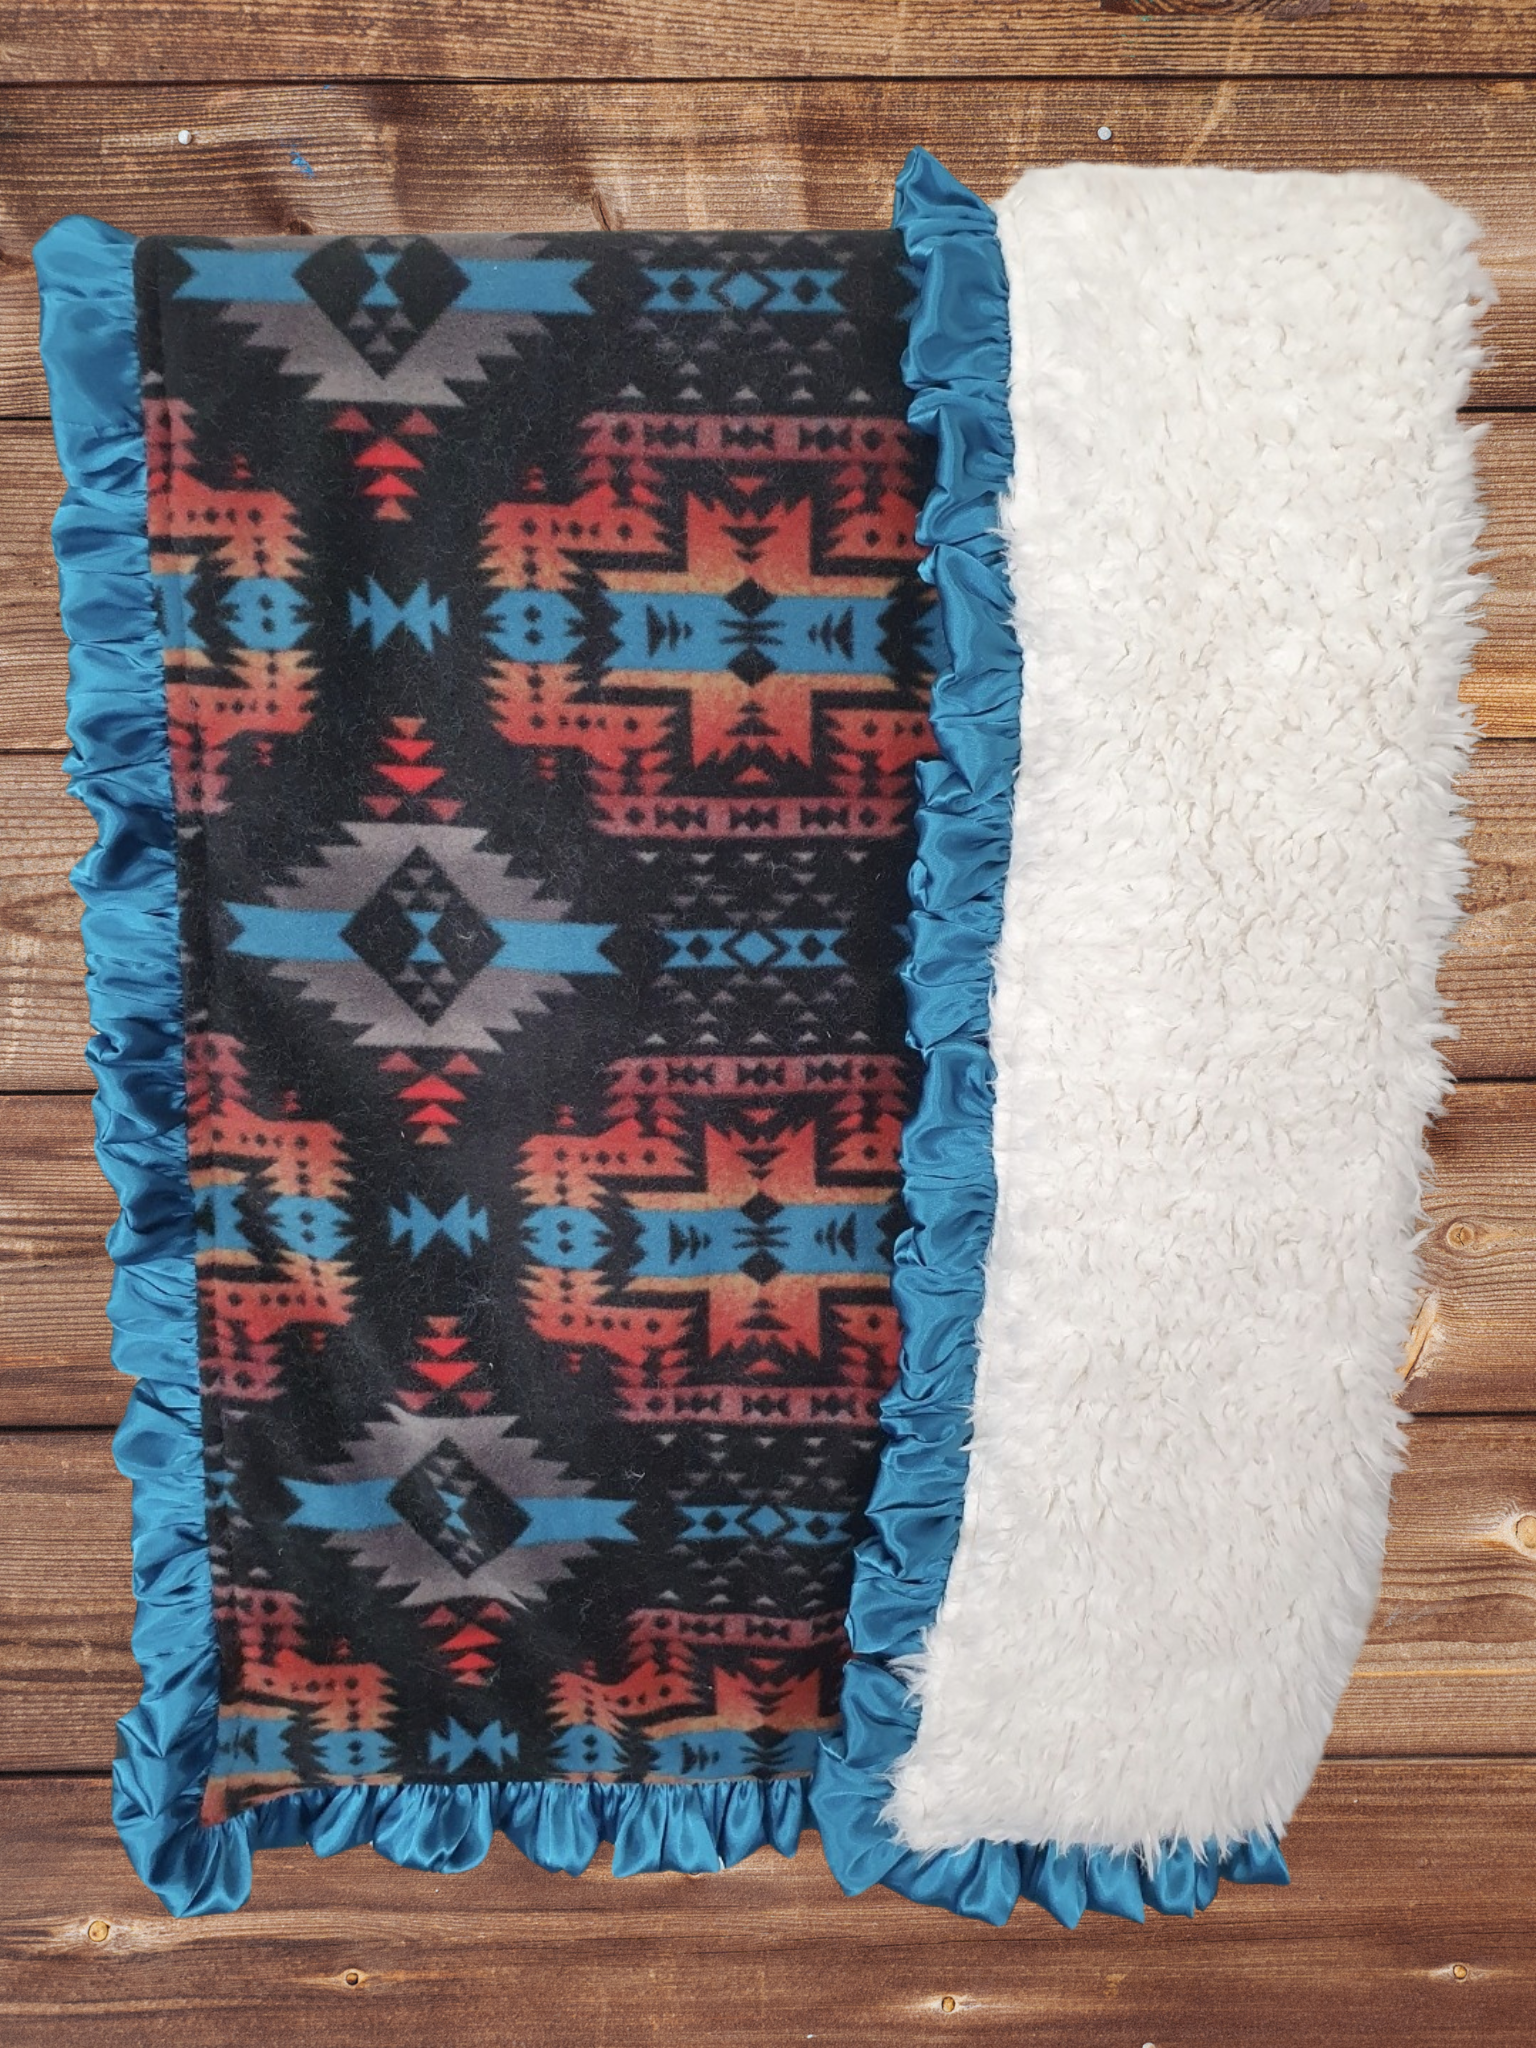 Ruffle Baby Blanket - Black Aztec and Llama Minky Western Blanket - DBC Baby Bedding Co 